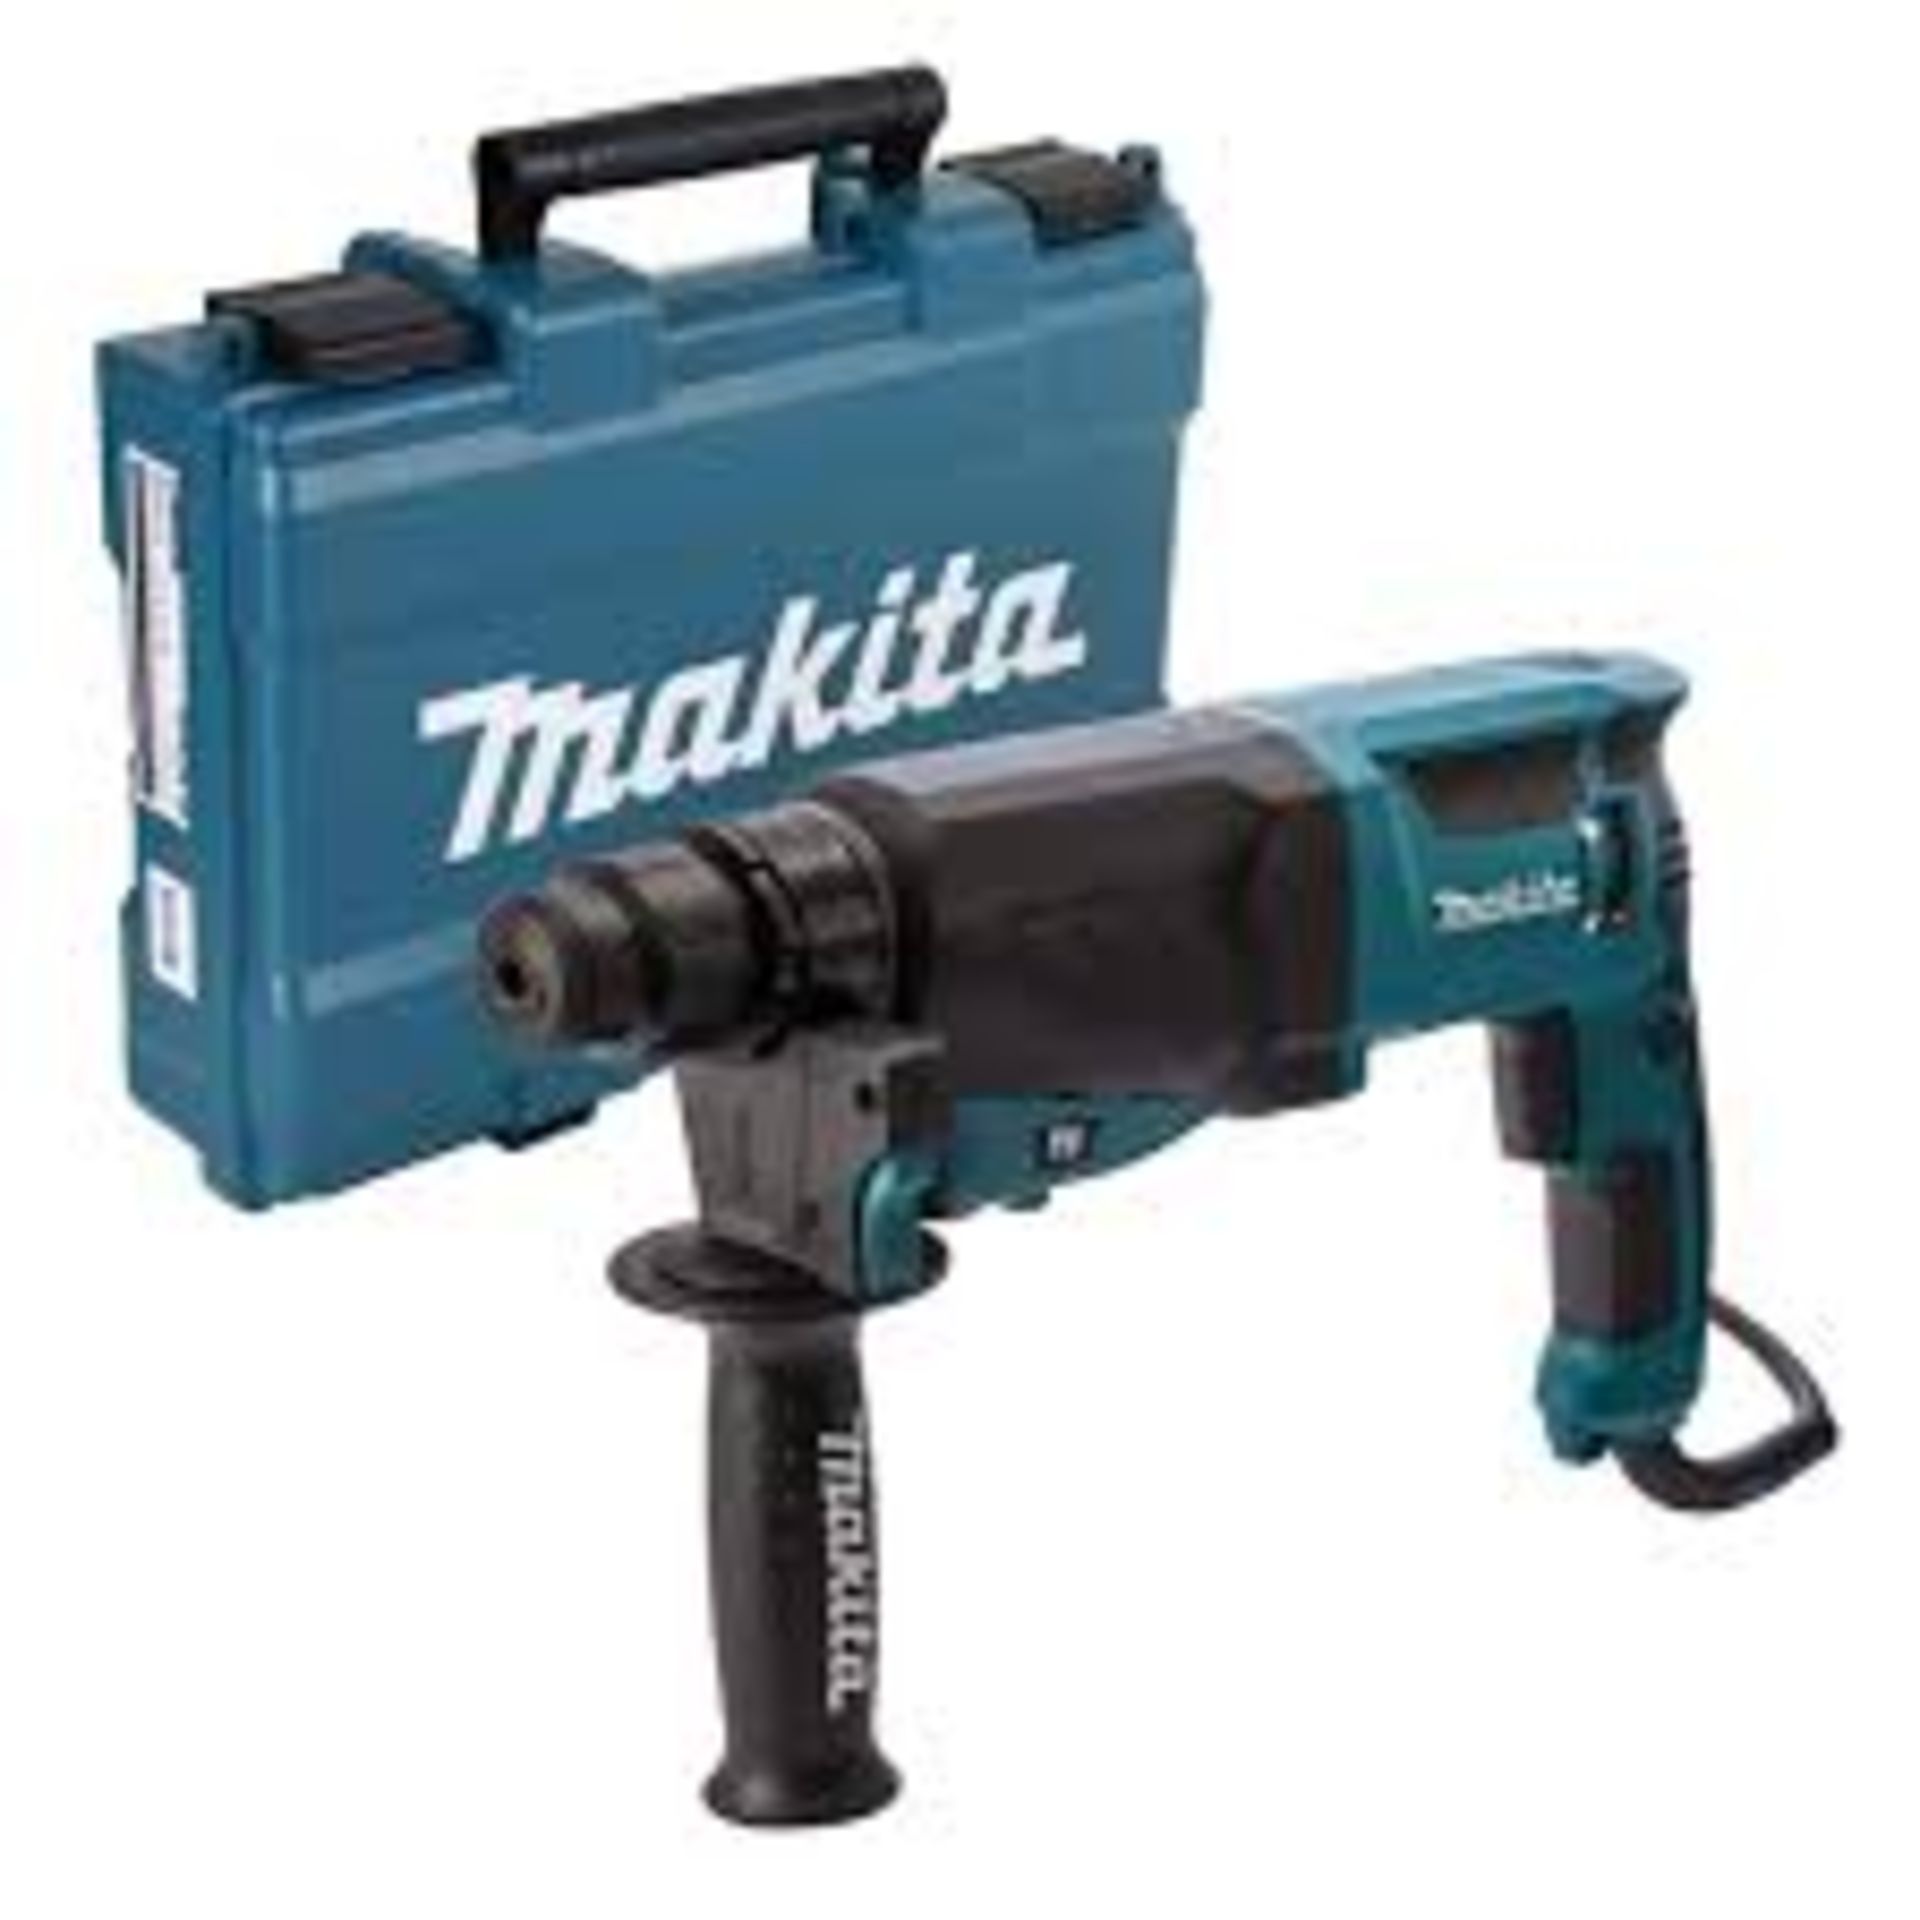 Makita 800W SDS-Plus Rotary Hammer Drill 230V. -P4. Efficient rotary hammer compatible with SDS-Plus